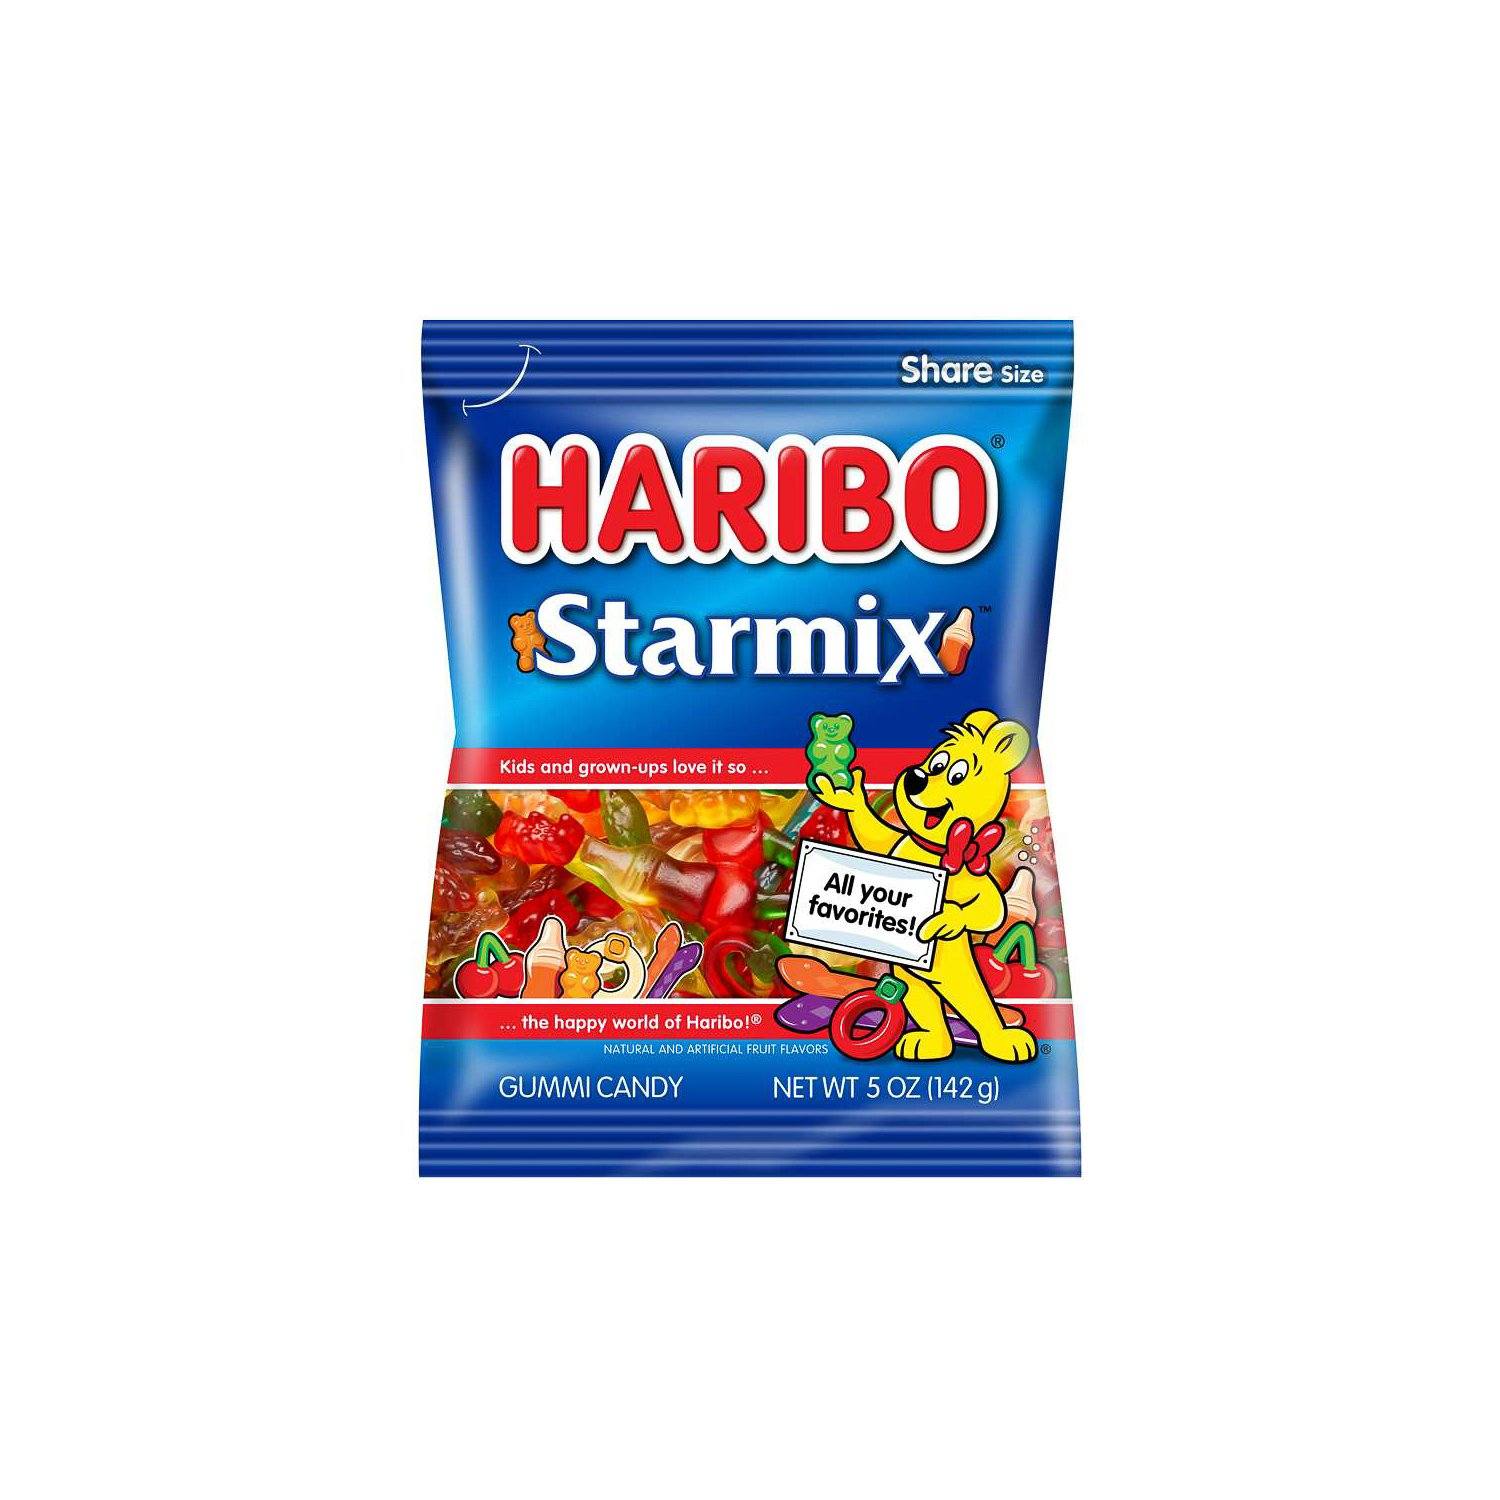 Haribo Gummi Candies Meltable Haribo Starmix 4 Ounce 